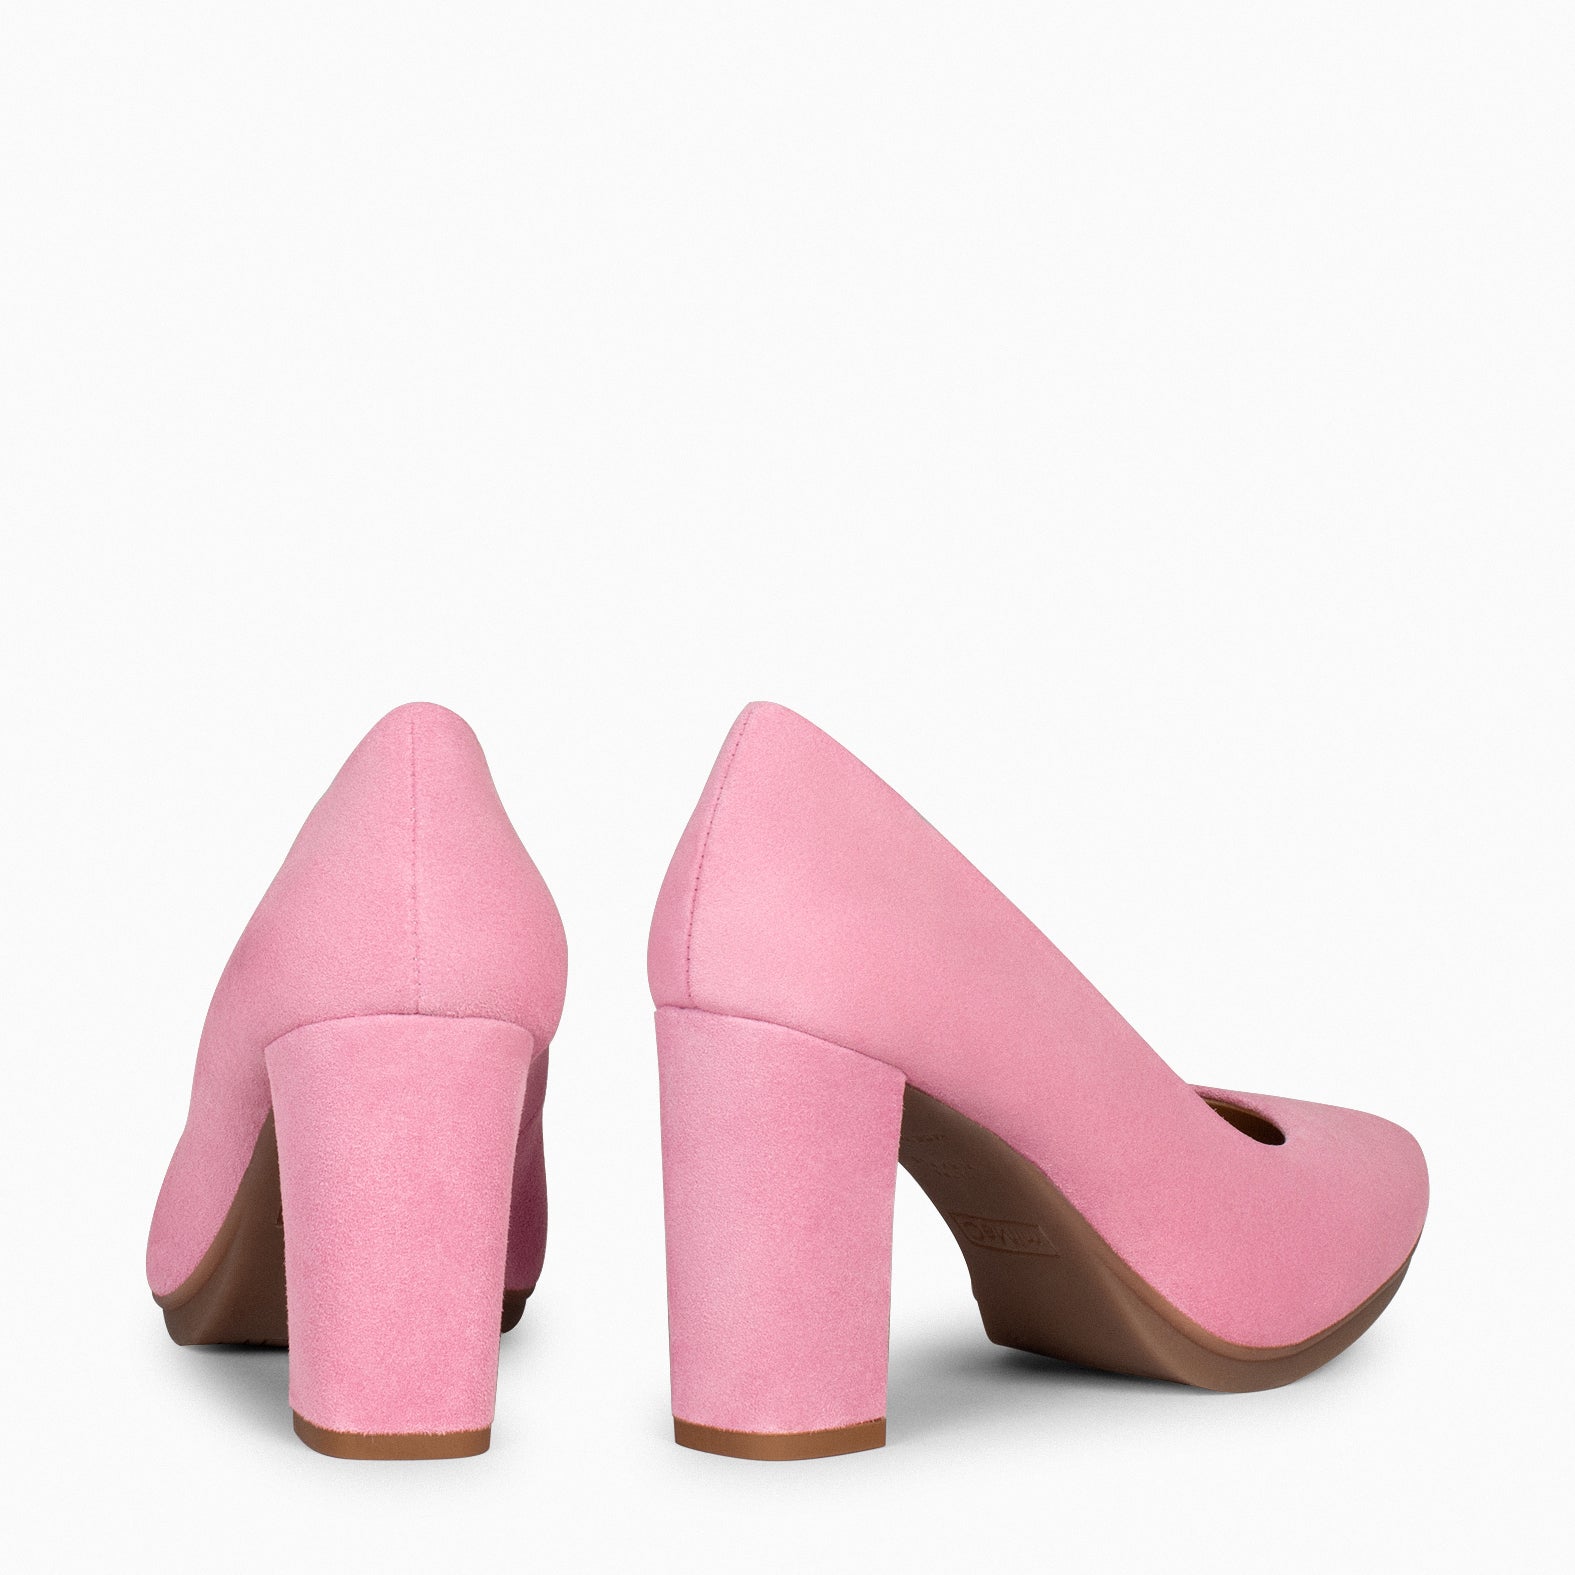 URBAN – Chaussures à talon haut en daim ROSE BONBON